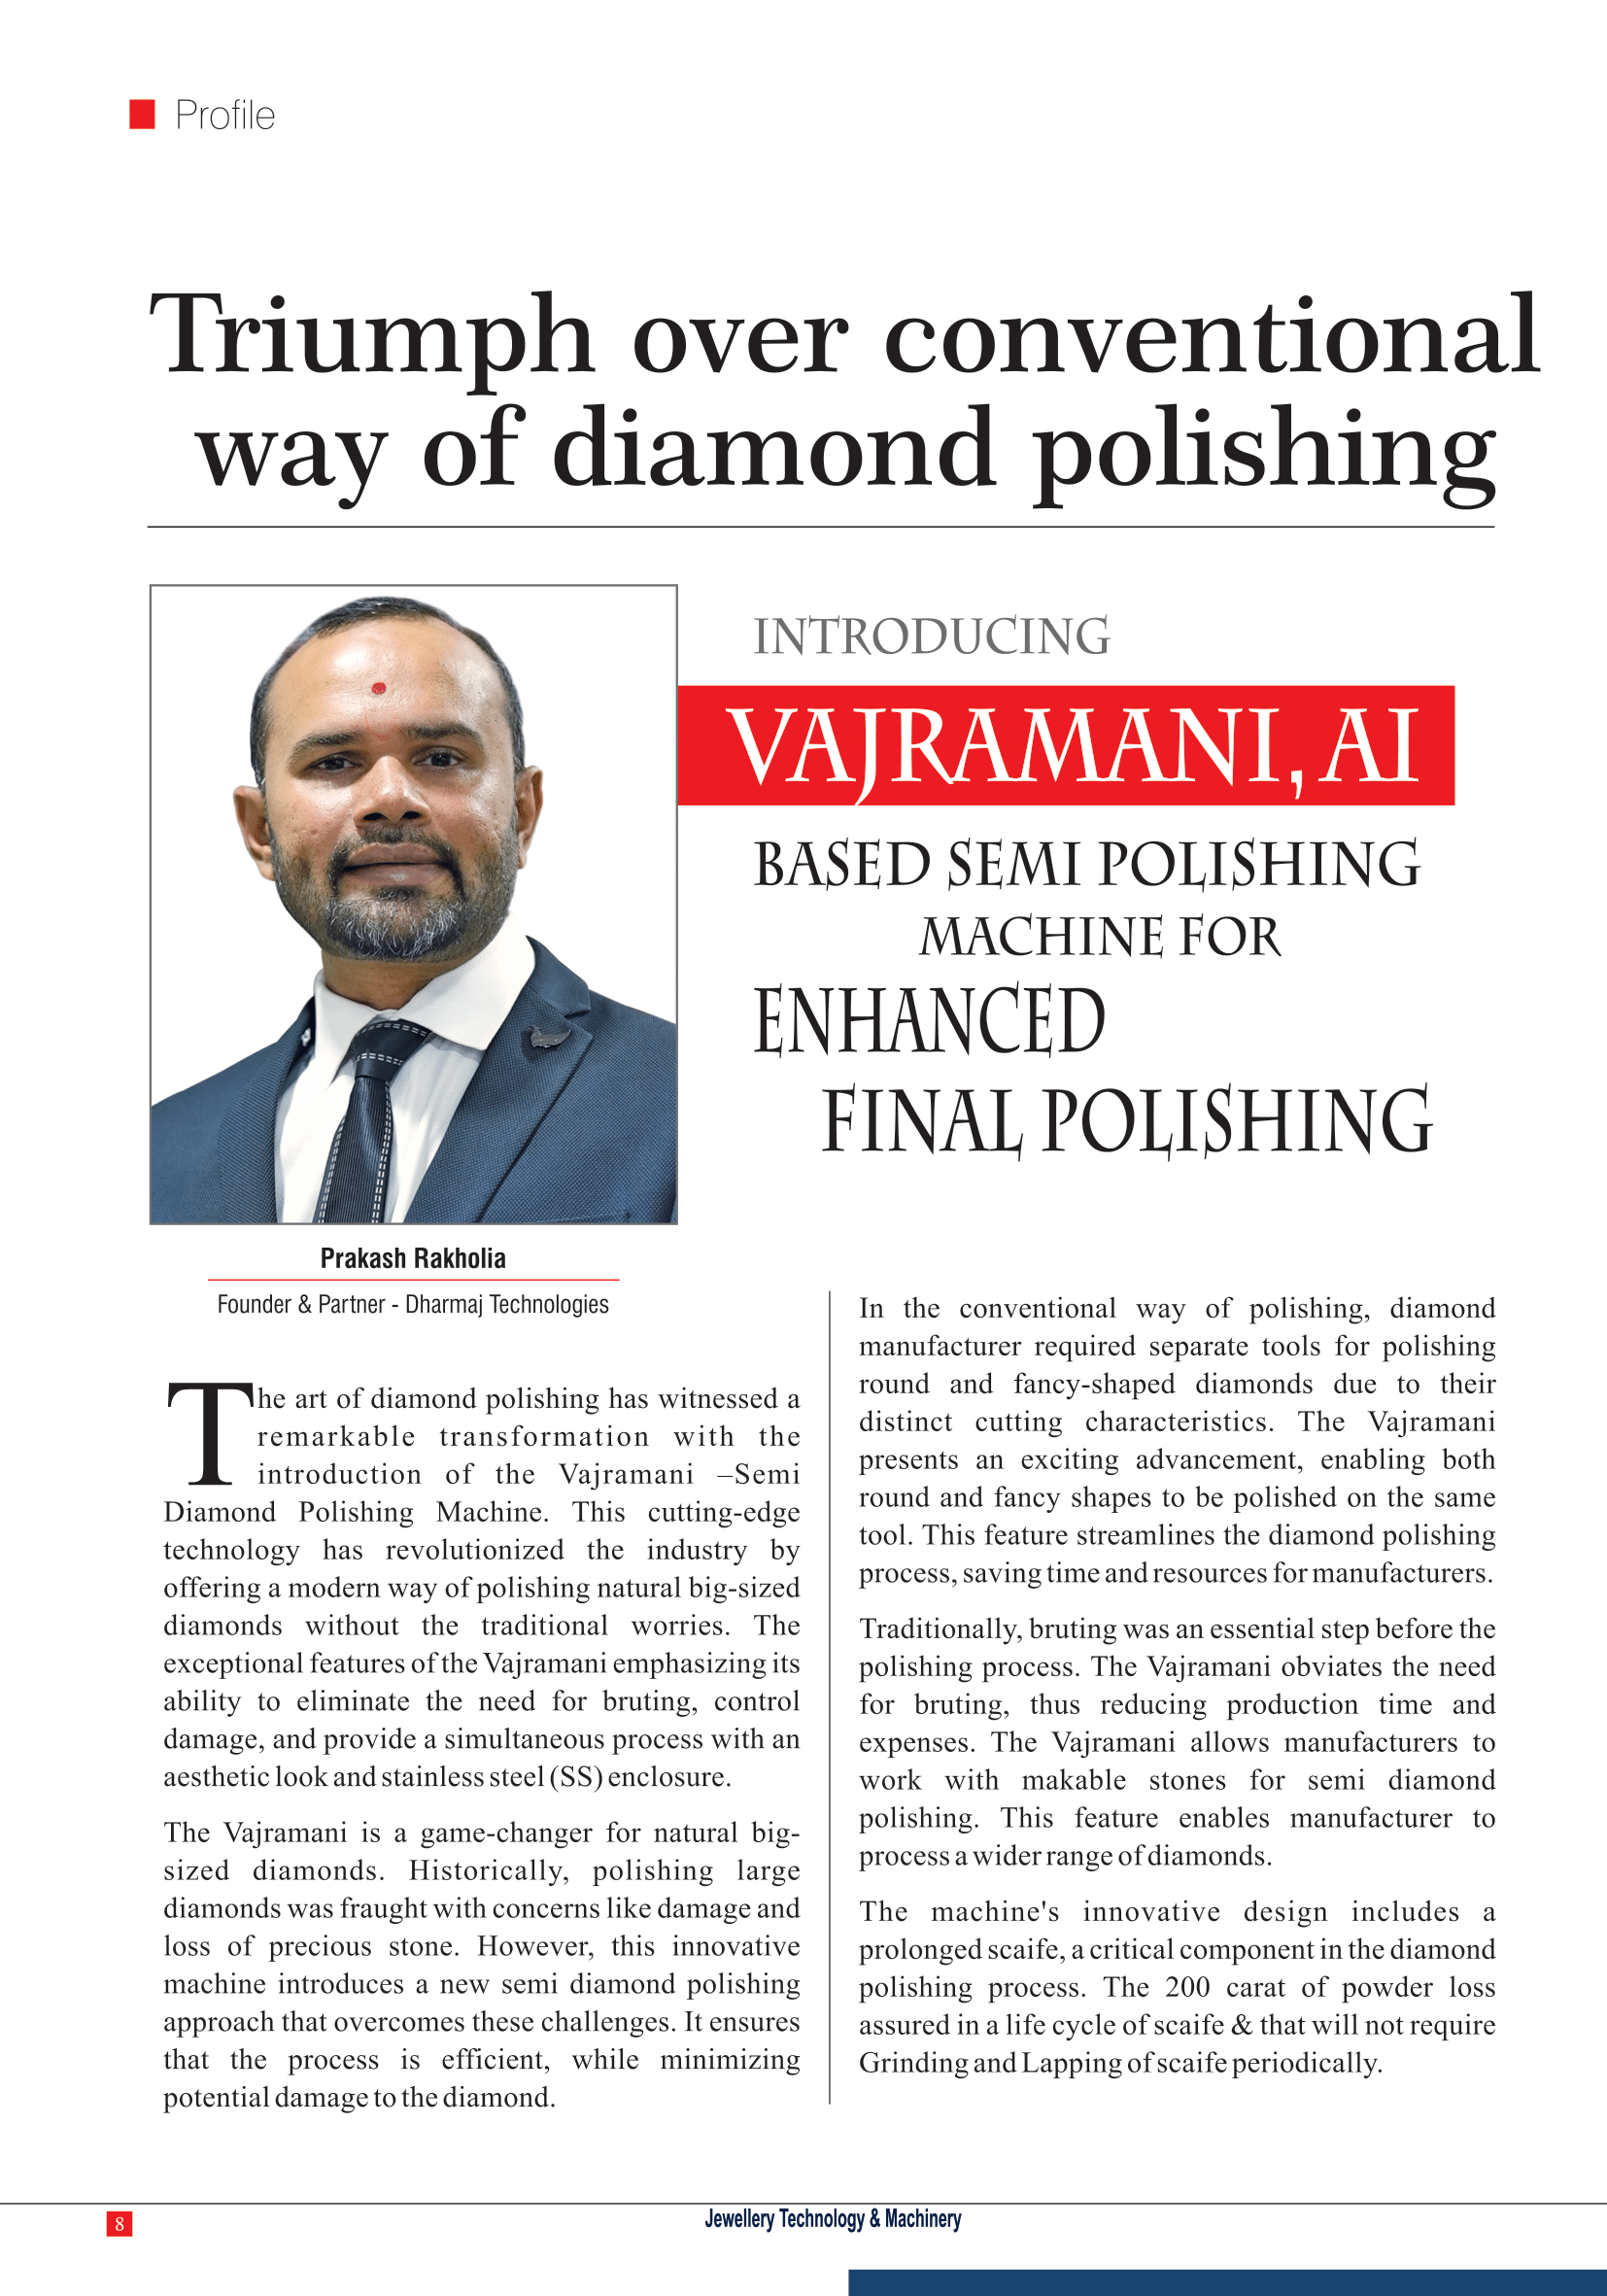 Triumph over Conventional Way of Diamond Polishing